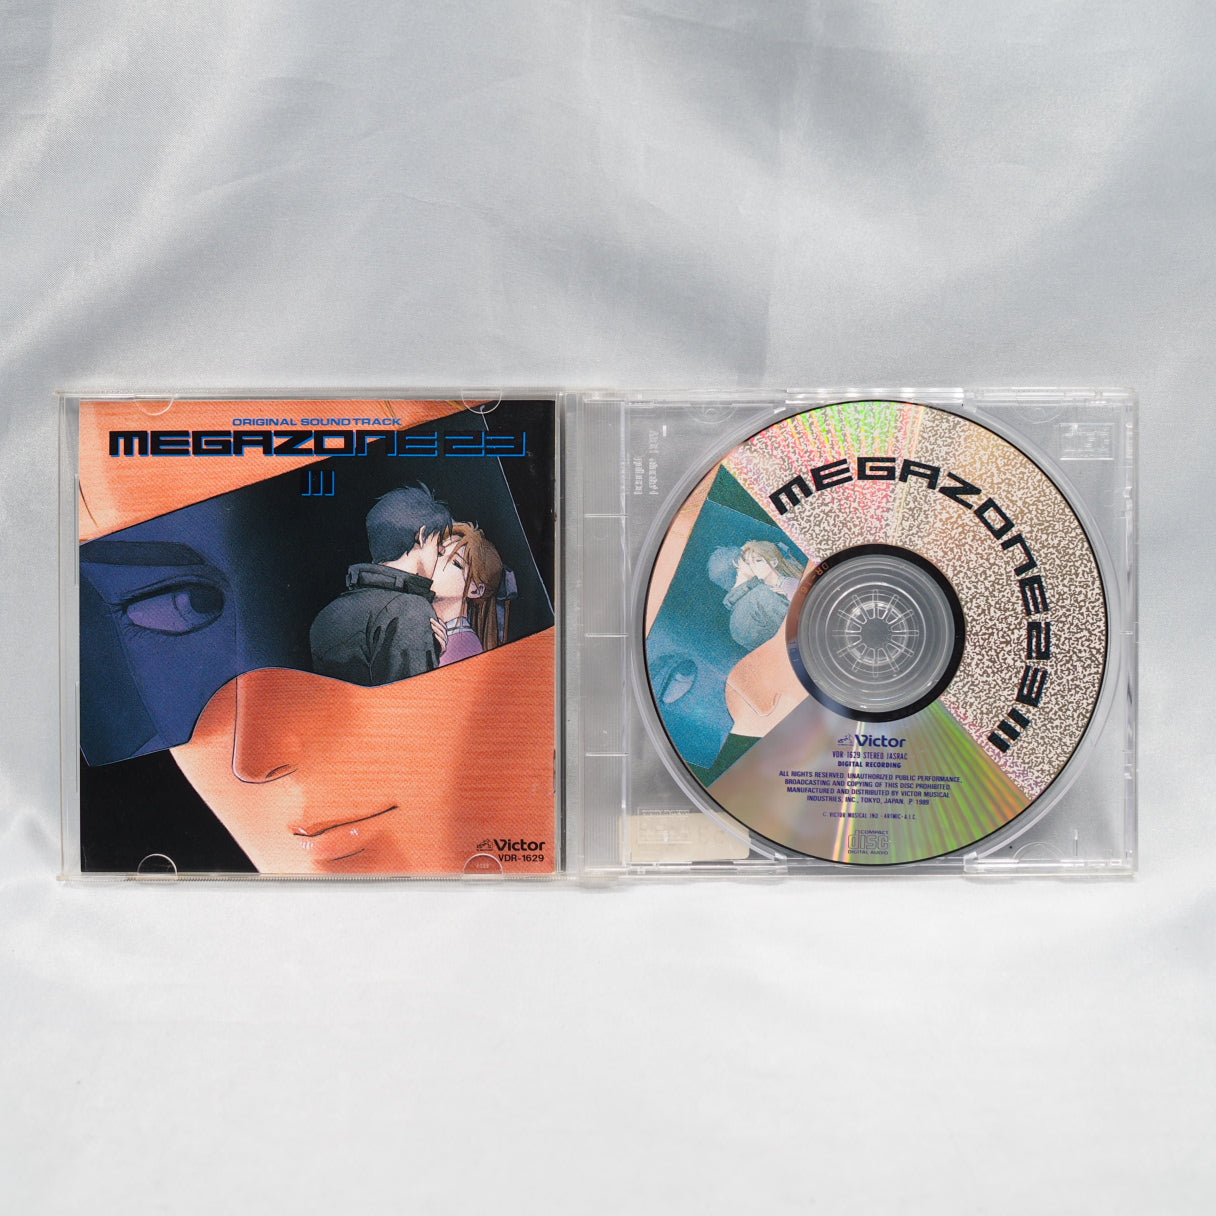 MEGAZONE 23 Ⅲ Original soundtrack